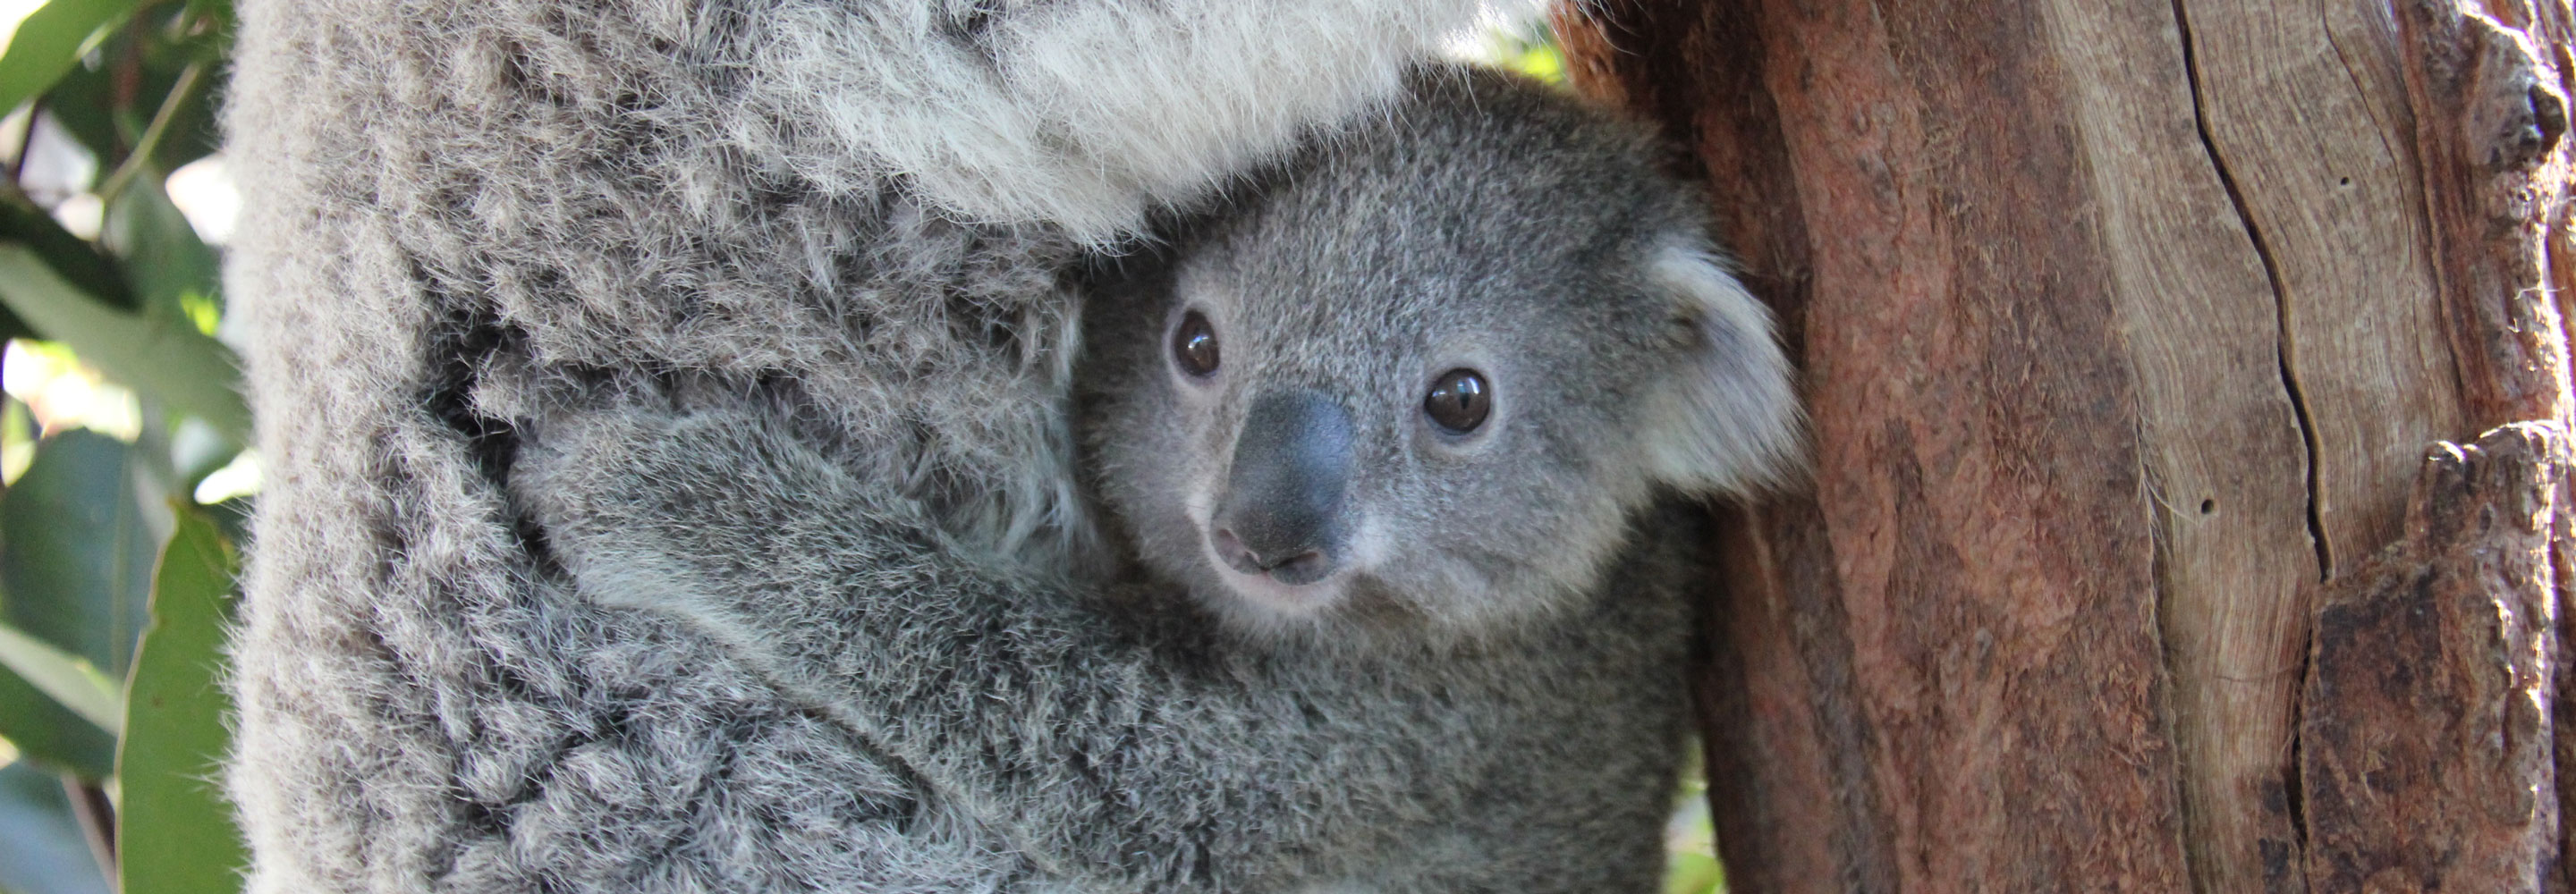 Save Our Koalas Appeal | Taronga Conservation Society Australia